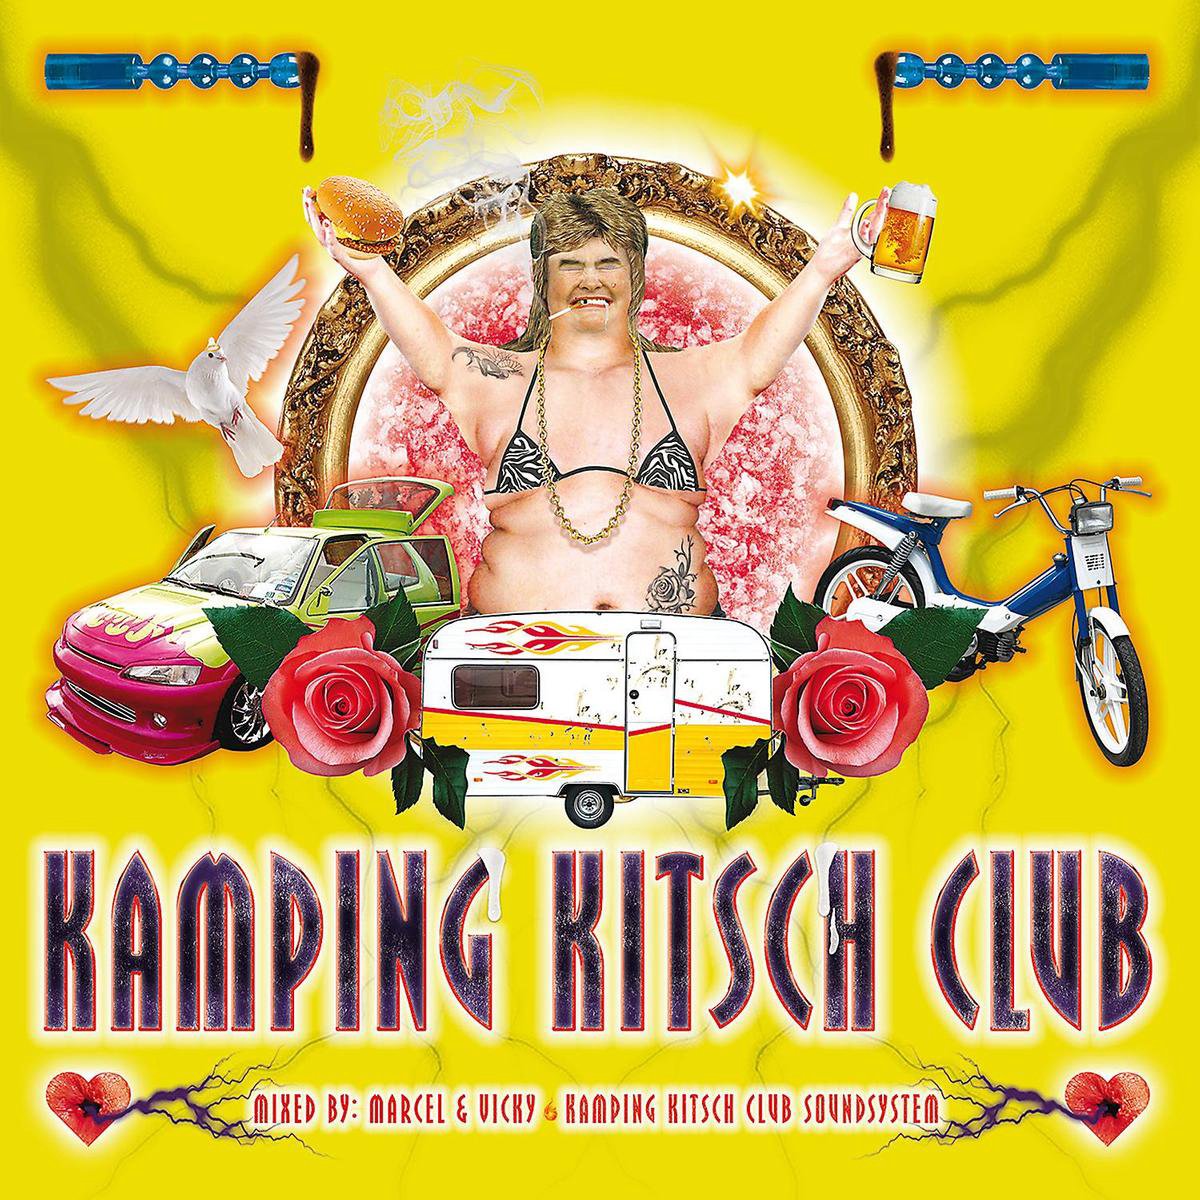 Kamping Kitsch Club - various artists